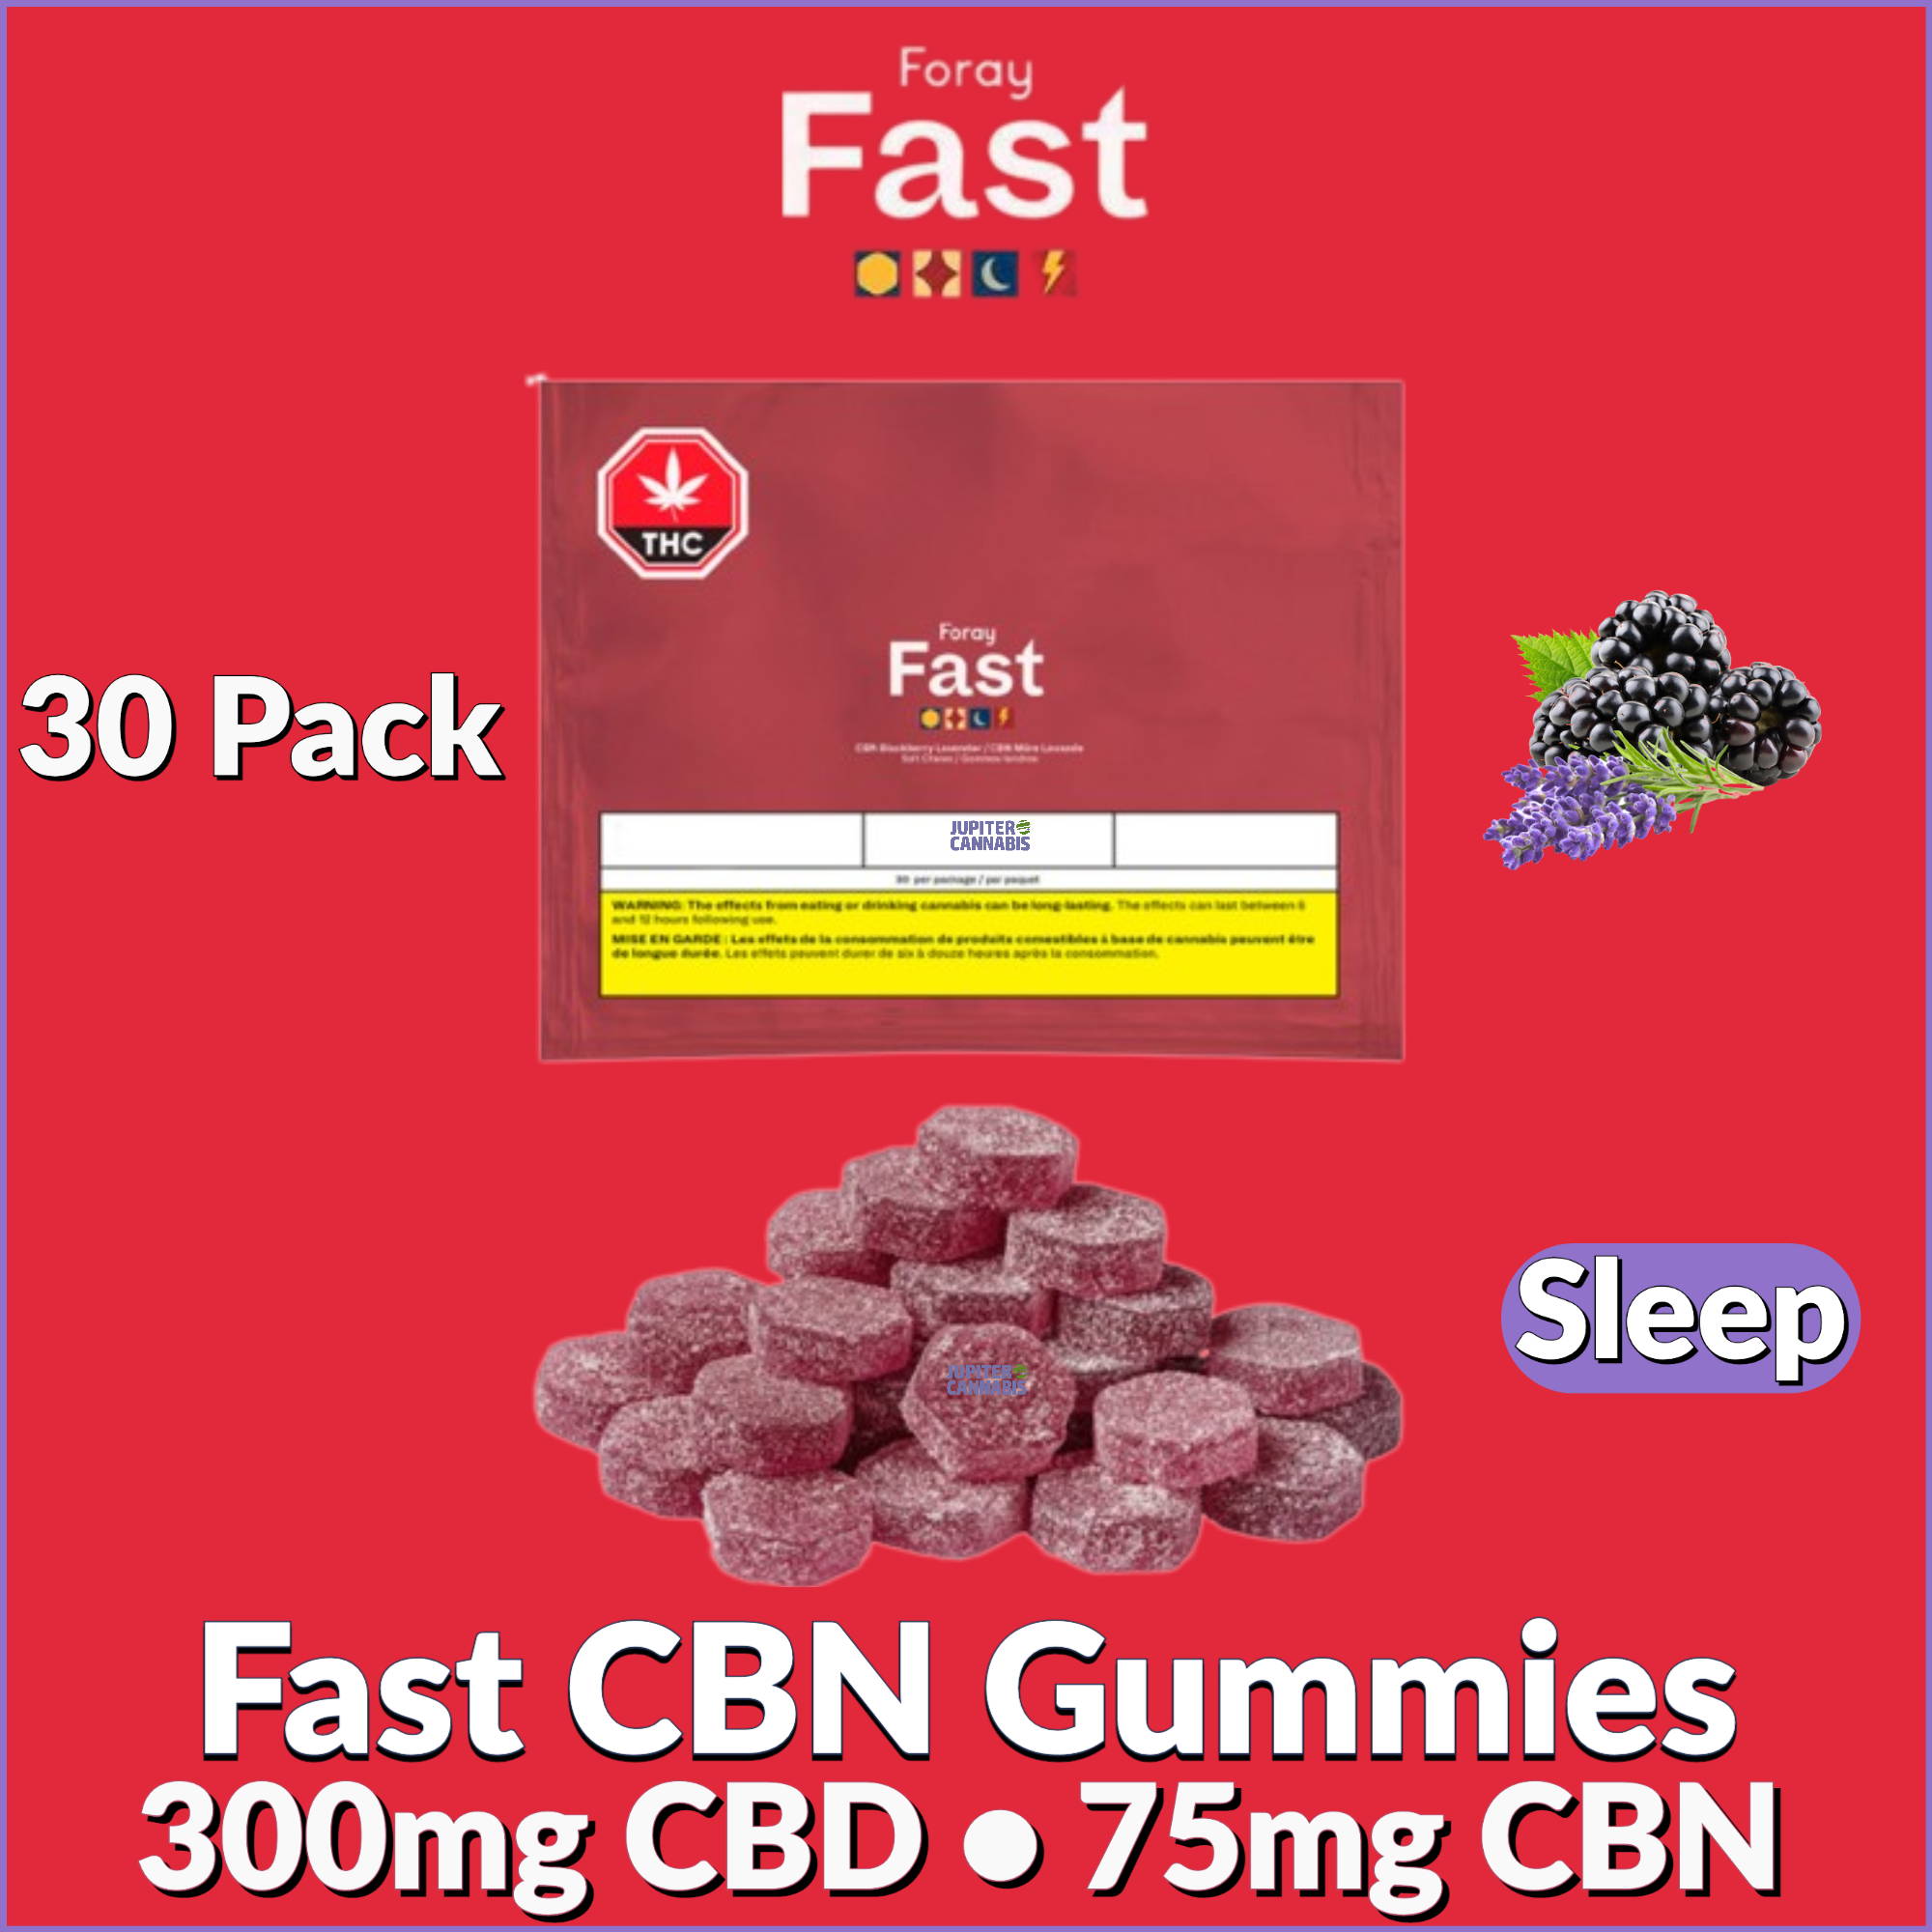 Fast CBN Gummies by Foray | Jupiter Cannabis Winnipeg